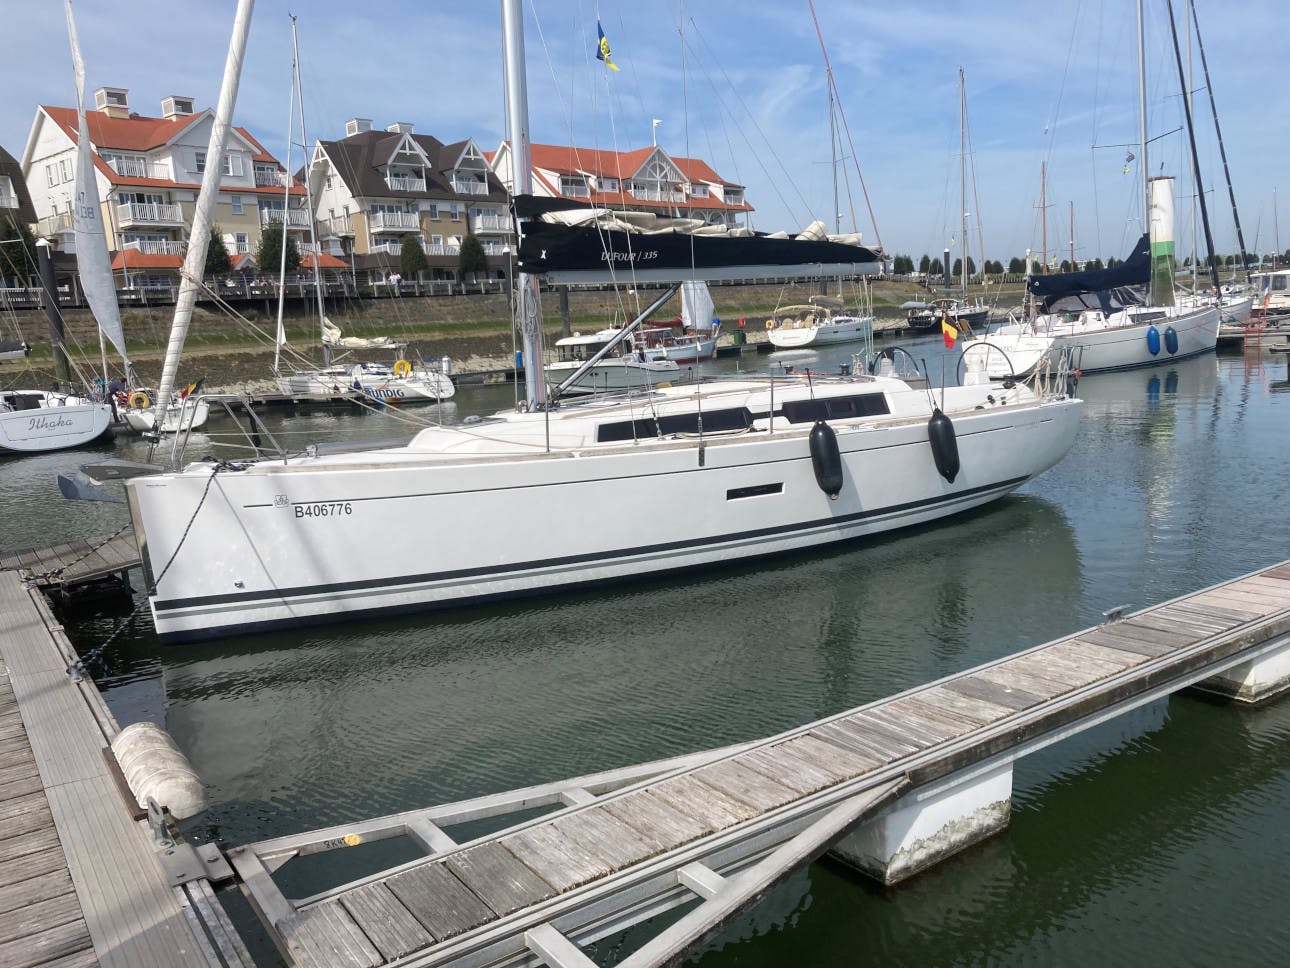 Book Dufour 335 GL Sailing yacht for bareboat charter in Nieuwpoort, Koninklijke Yacht Club, Flemish Region, Belgium with TripYacht!, picture 1